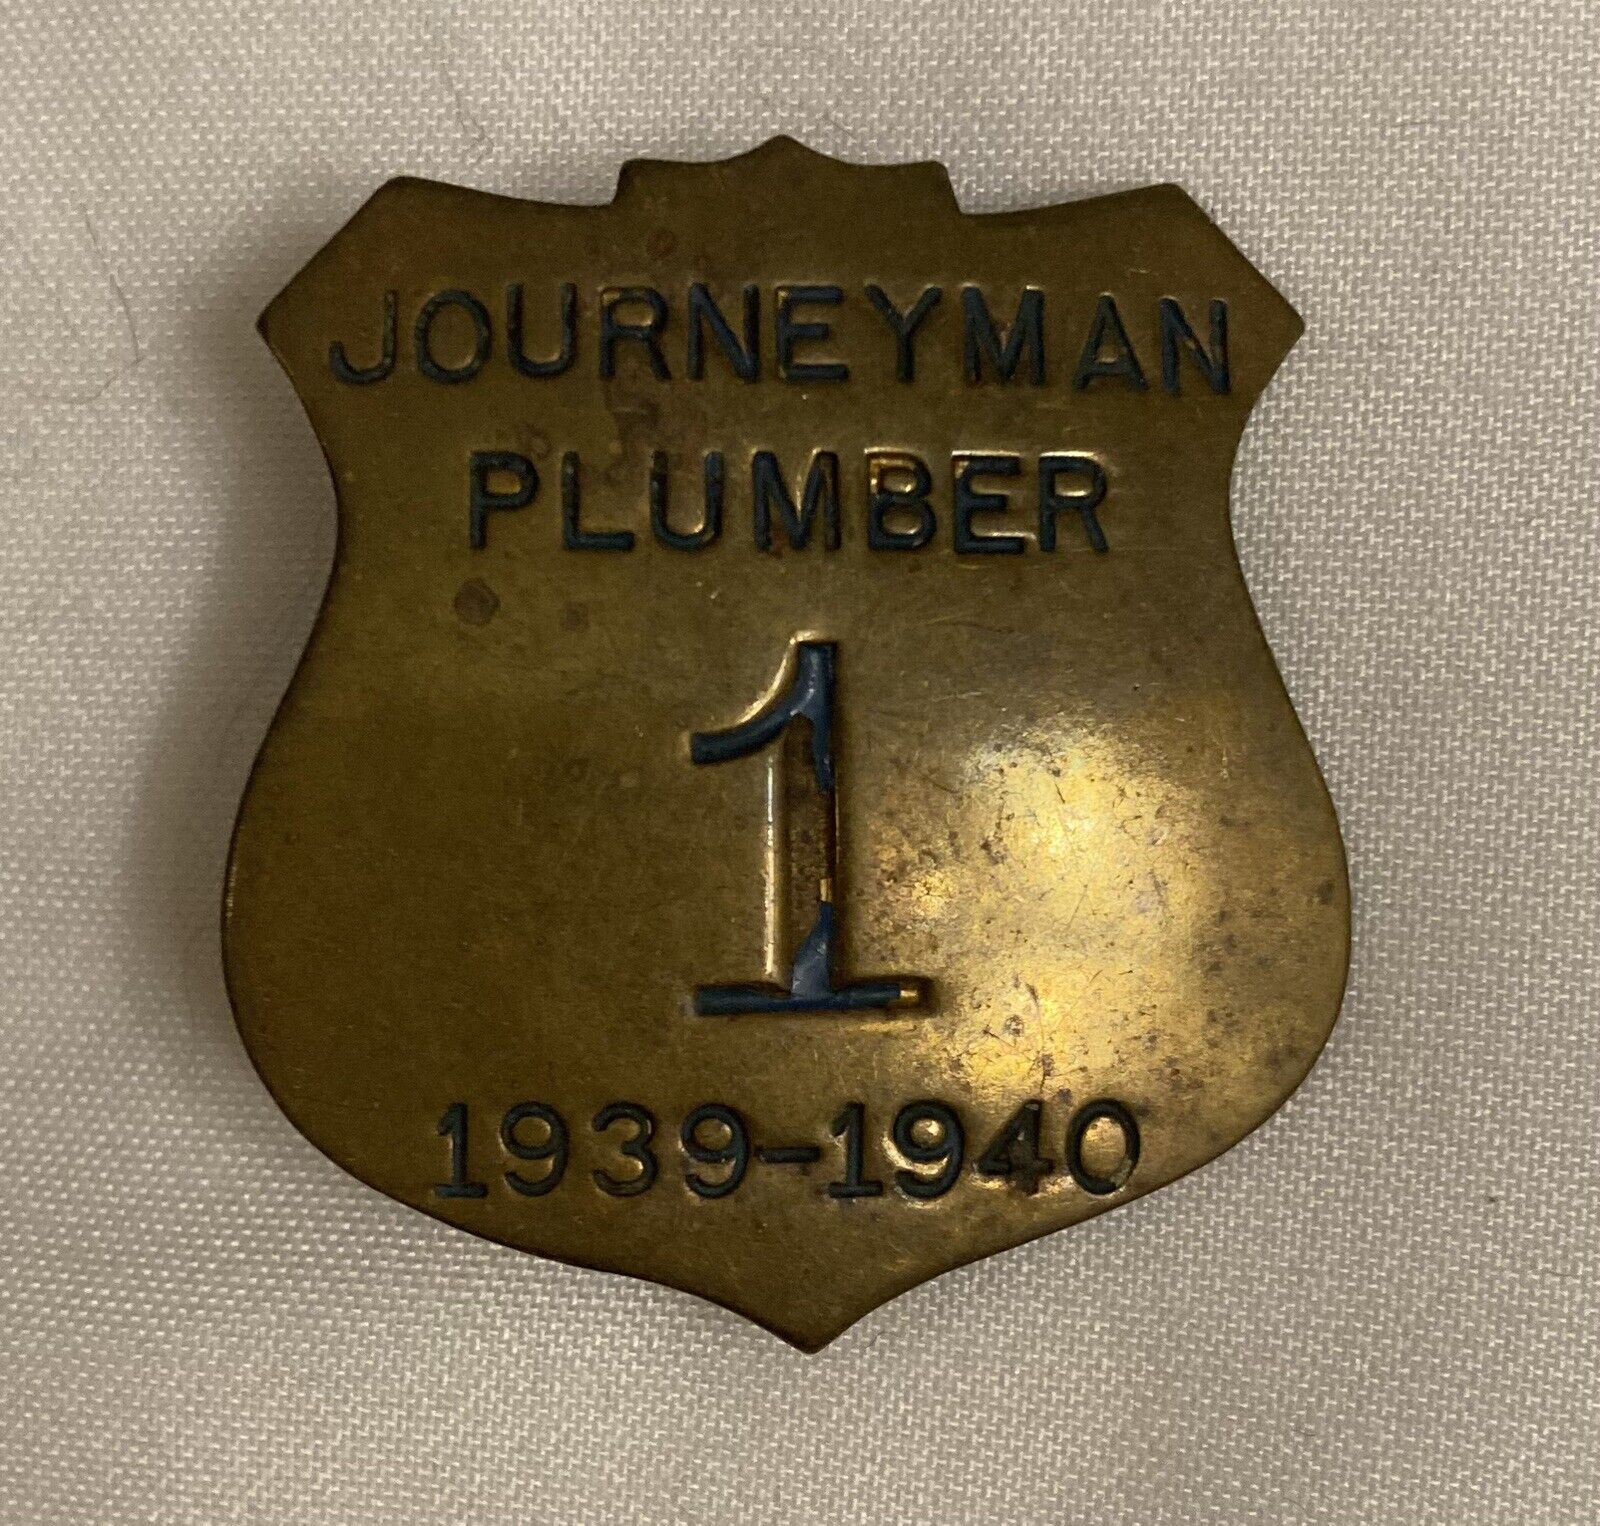 Vintage Plumbers Brass Pin Badge Journeyman Plumber #1  1939-1940